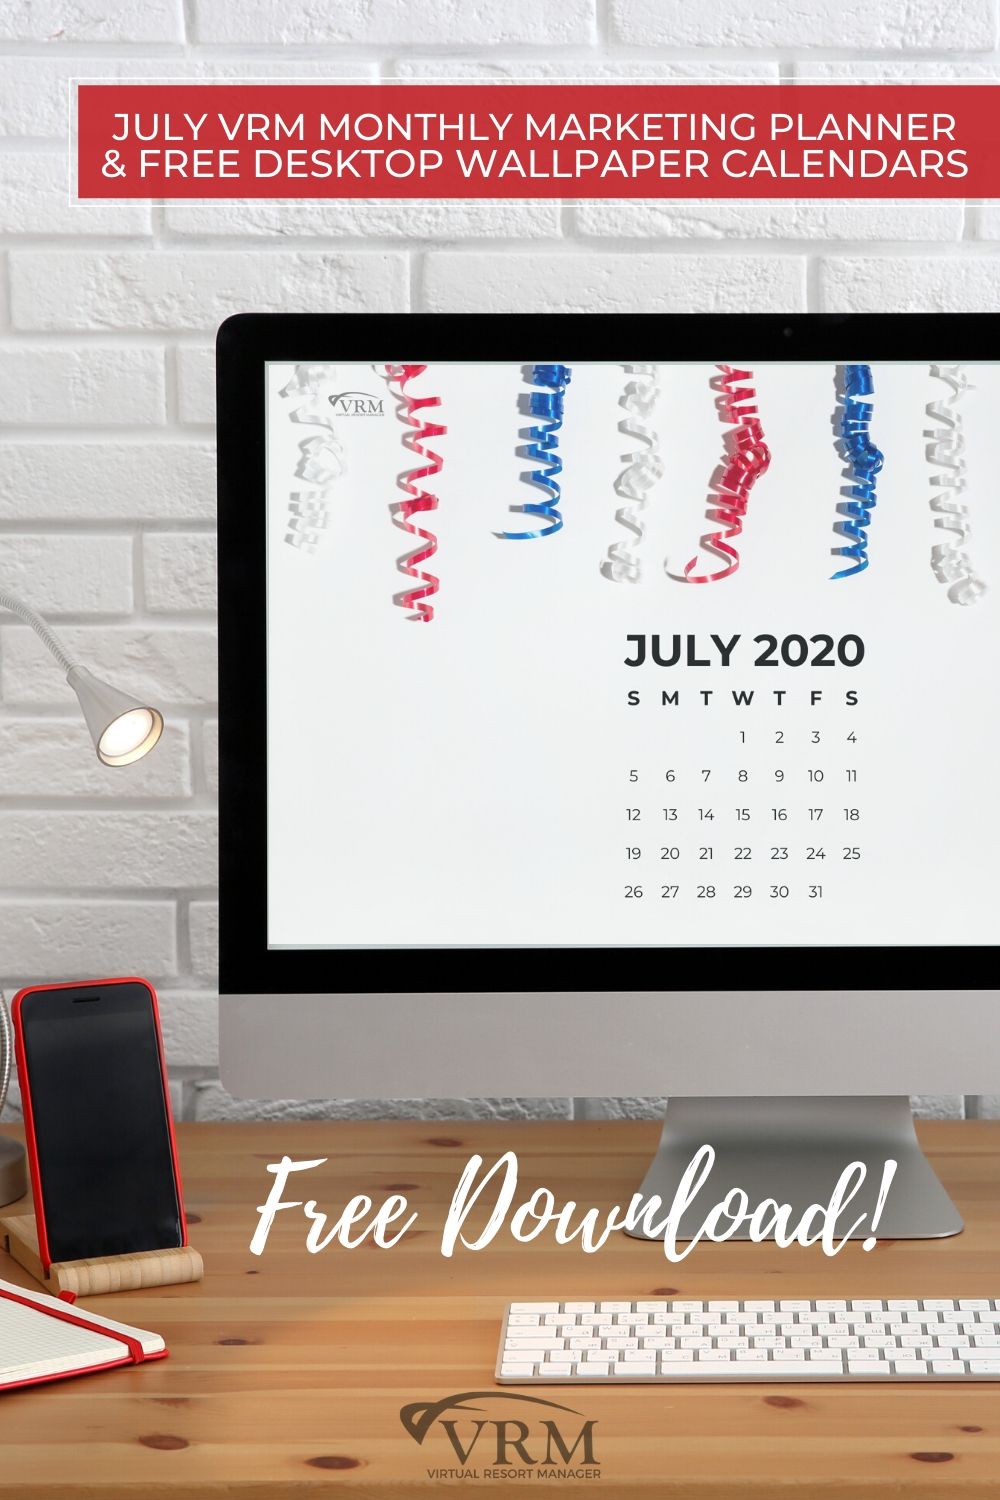 July VRM Monthly Marketing Planner and Free Desktop Wallpaper Calendars